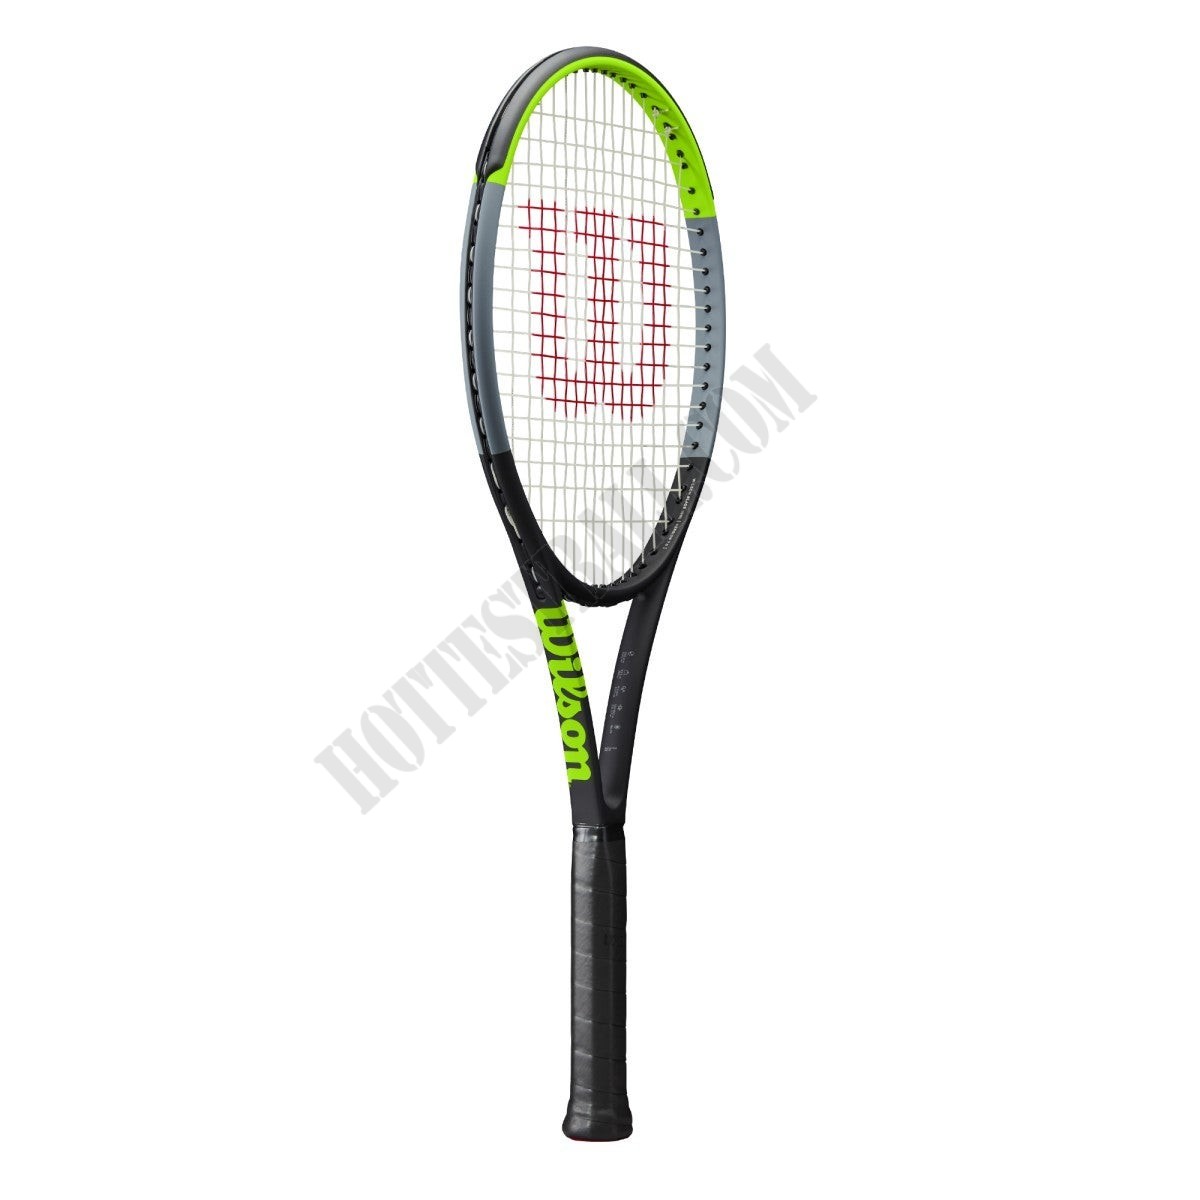 Blade 100L V7 Tennis Racket - Wilson Discount Store - Blade 100L V7 Tennis Racket - Wilson Discount Store